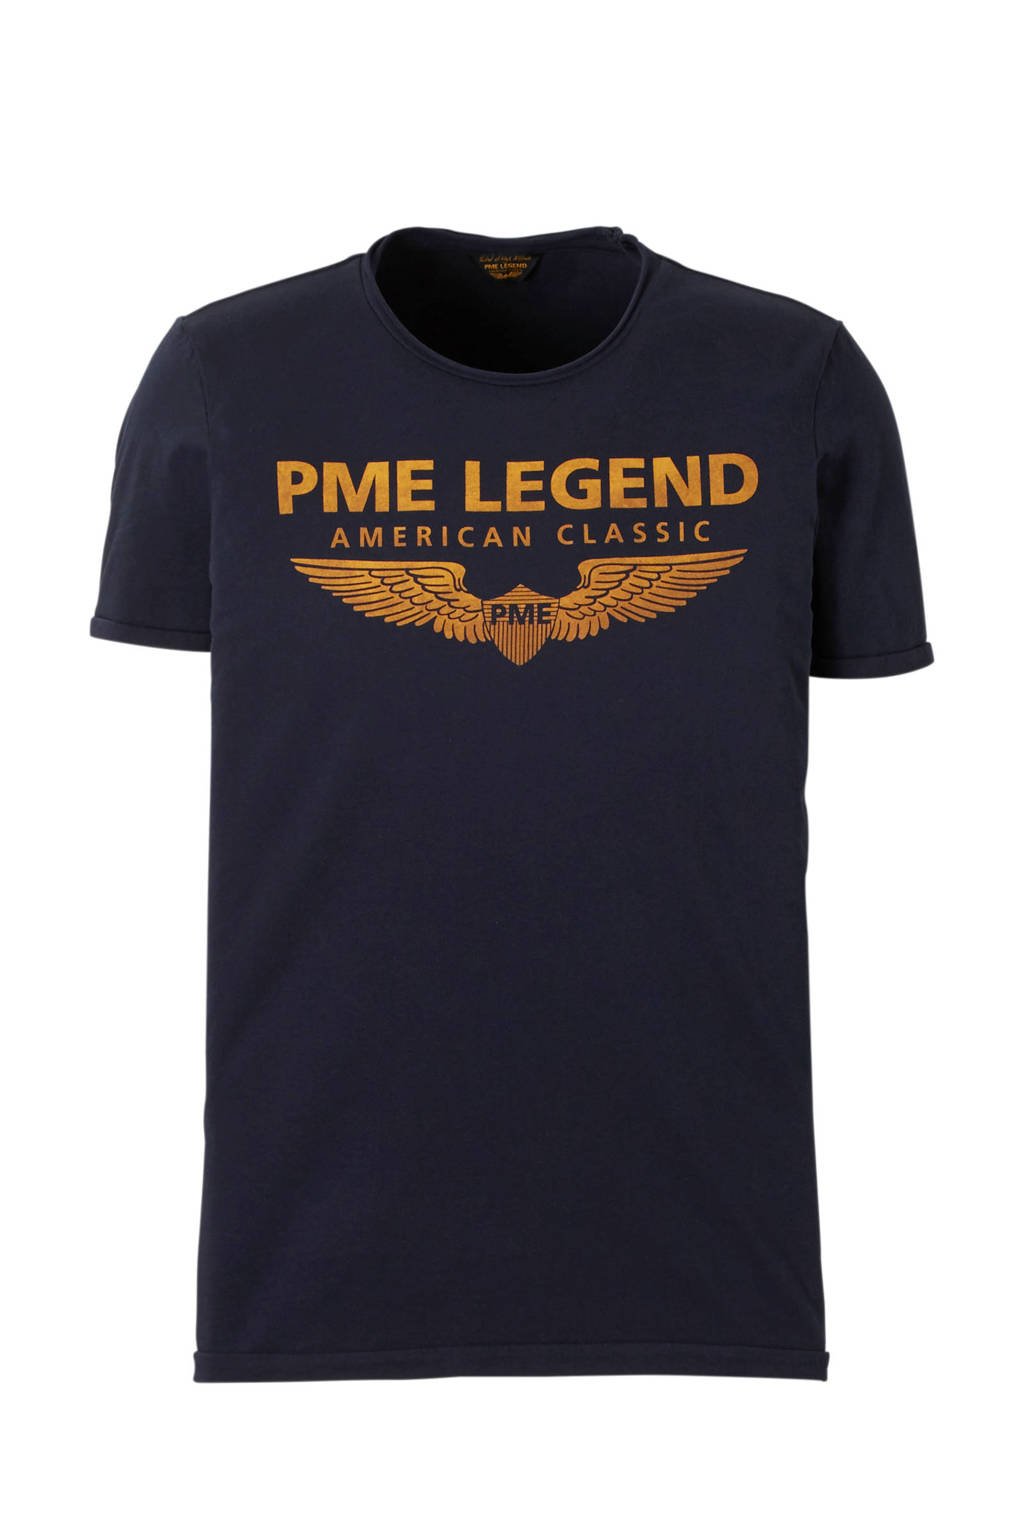 parallel Grof Spruit PME Legend T-shirt met logo marine | wehkamp